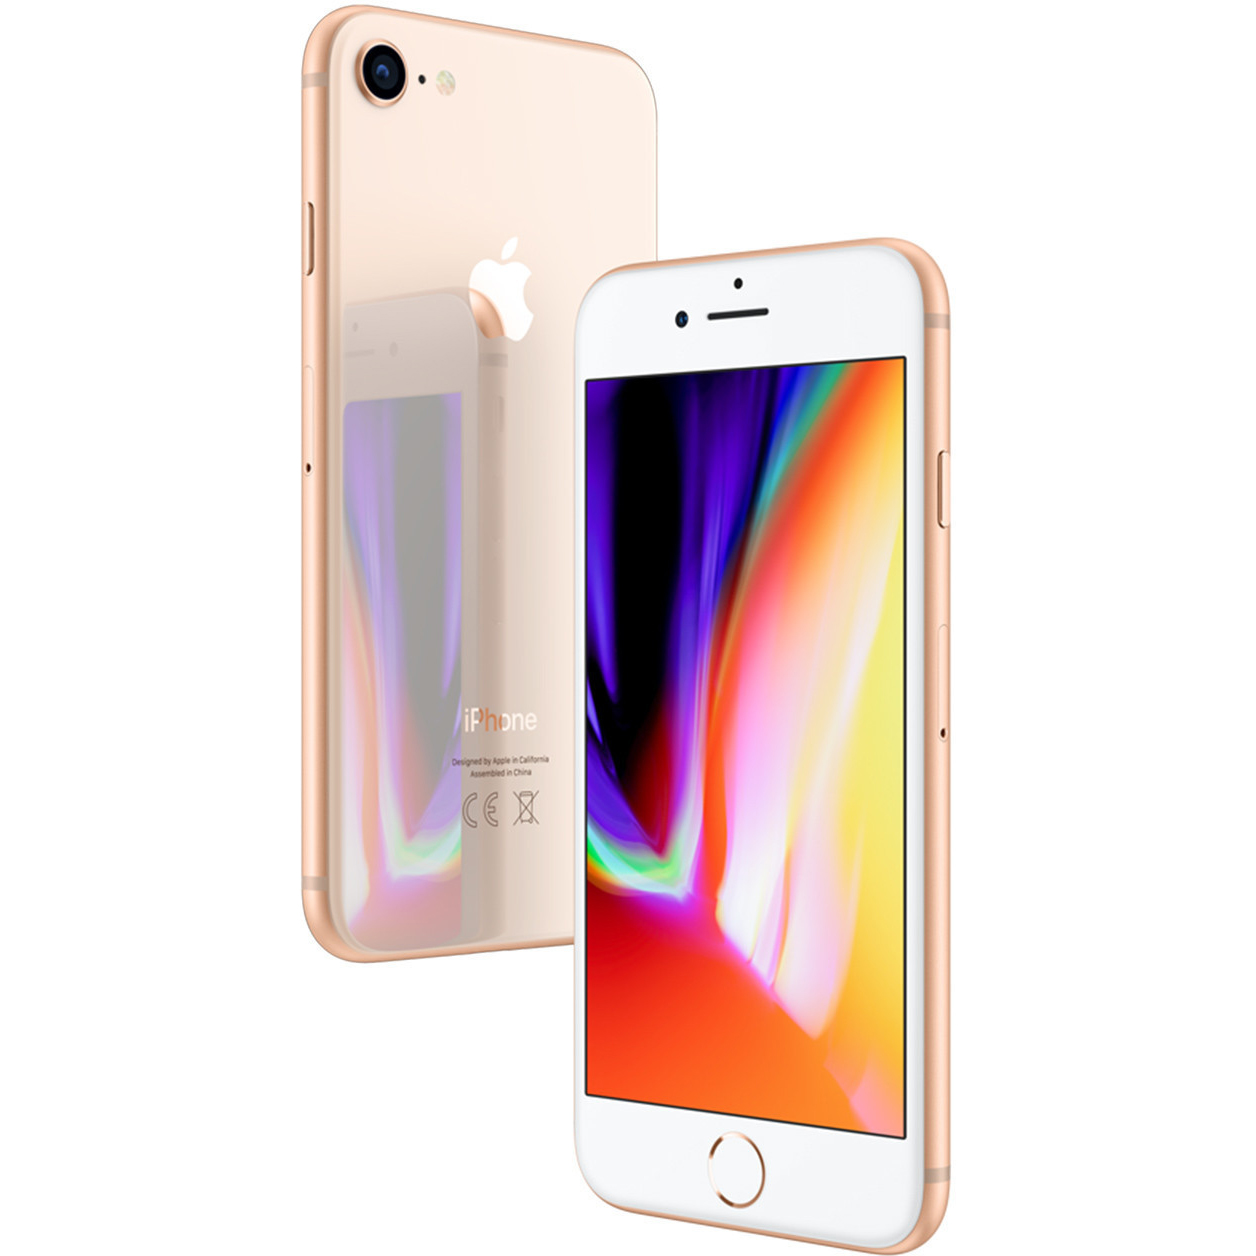 APPLE REFURBISHED (*) 8 SIM GB iPhone Dual gold 64